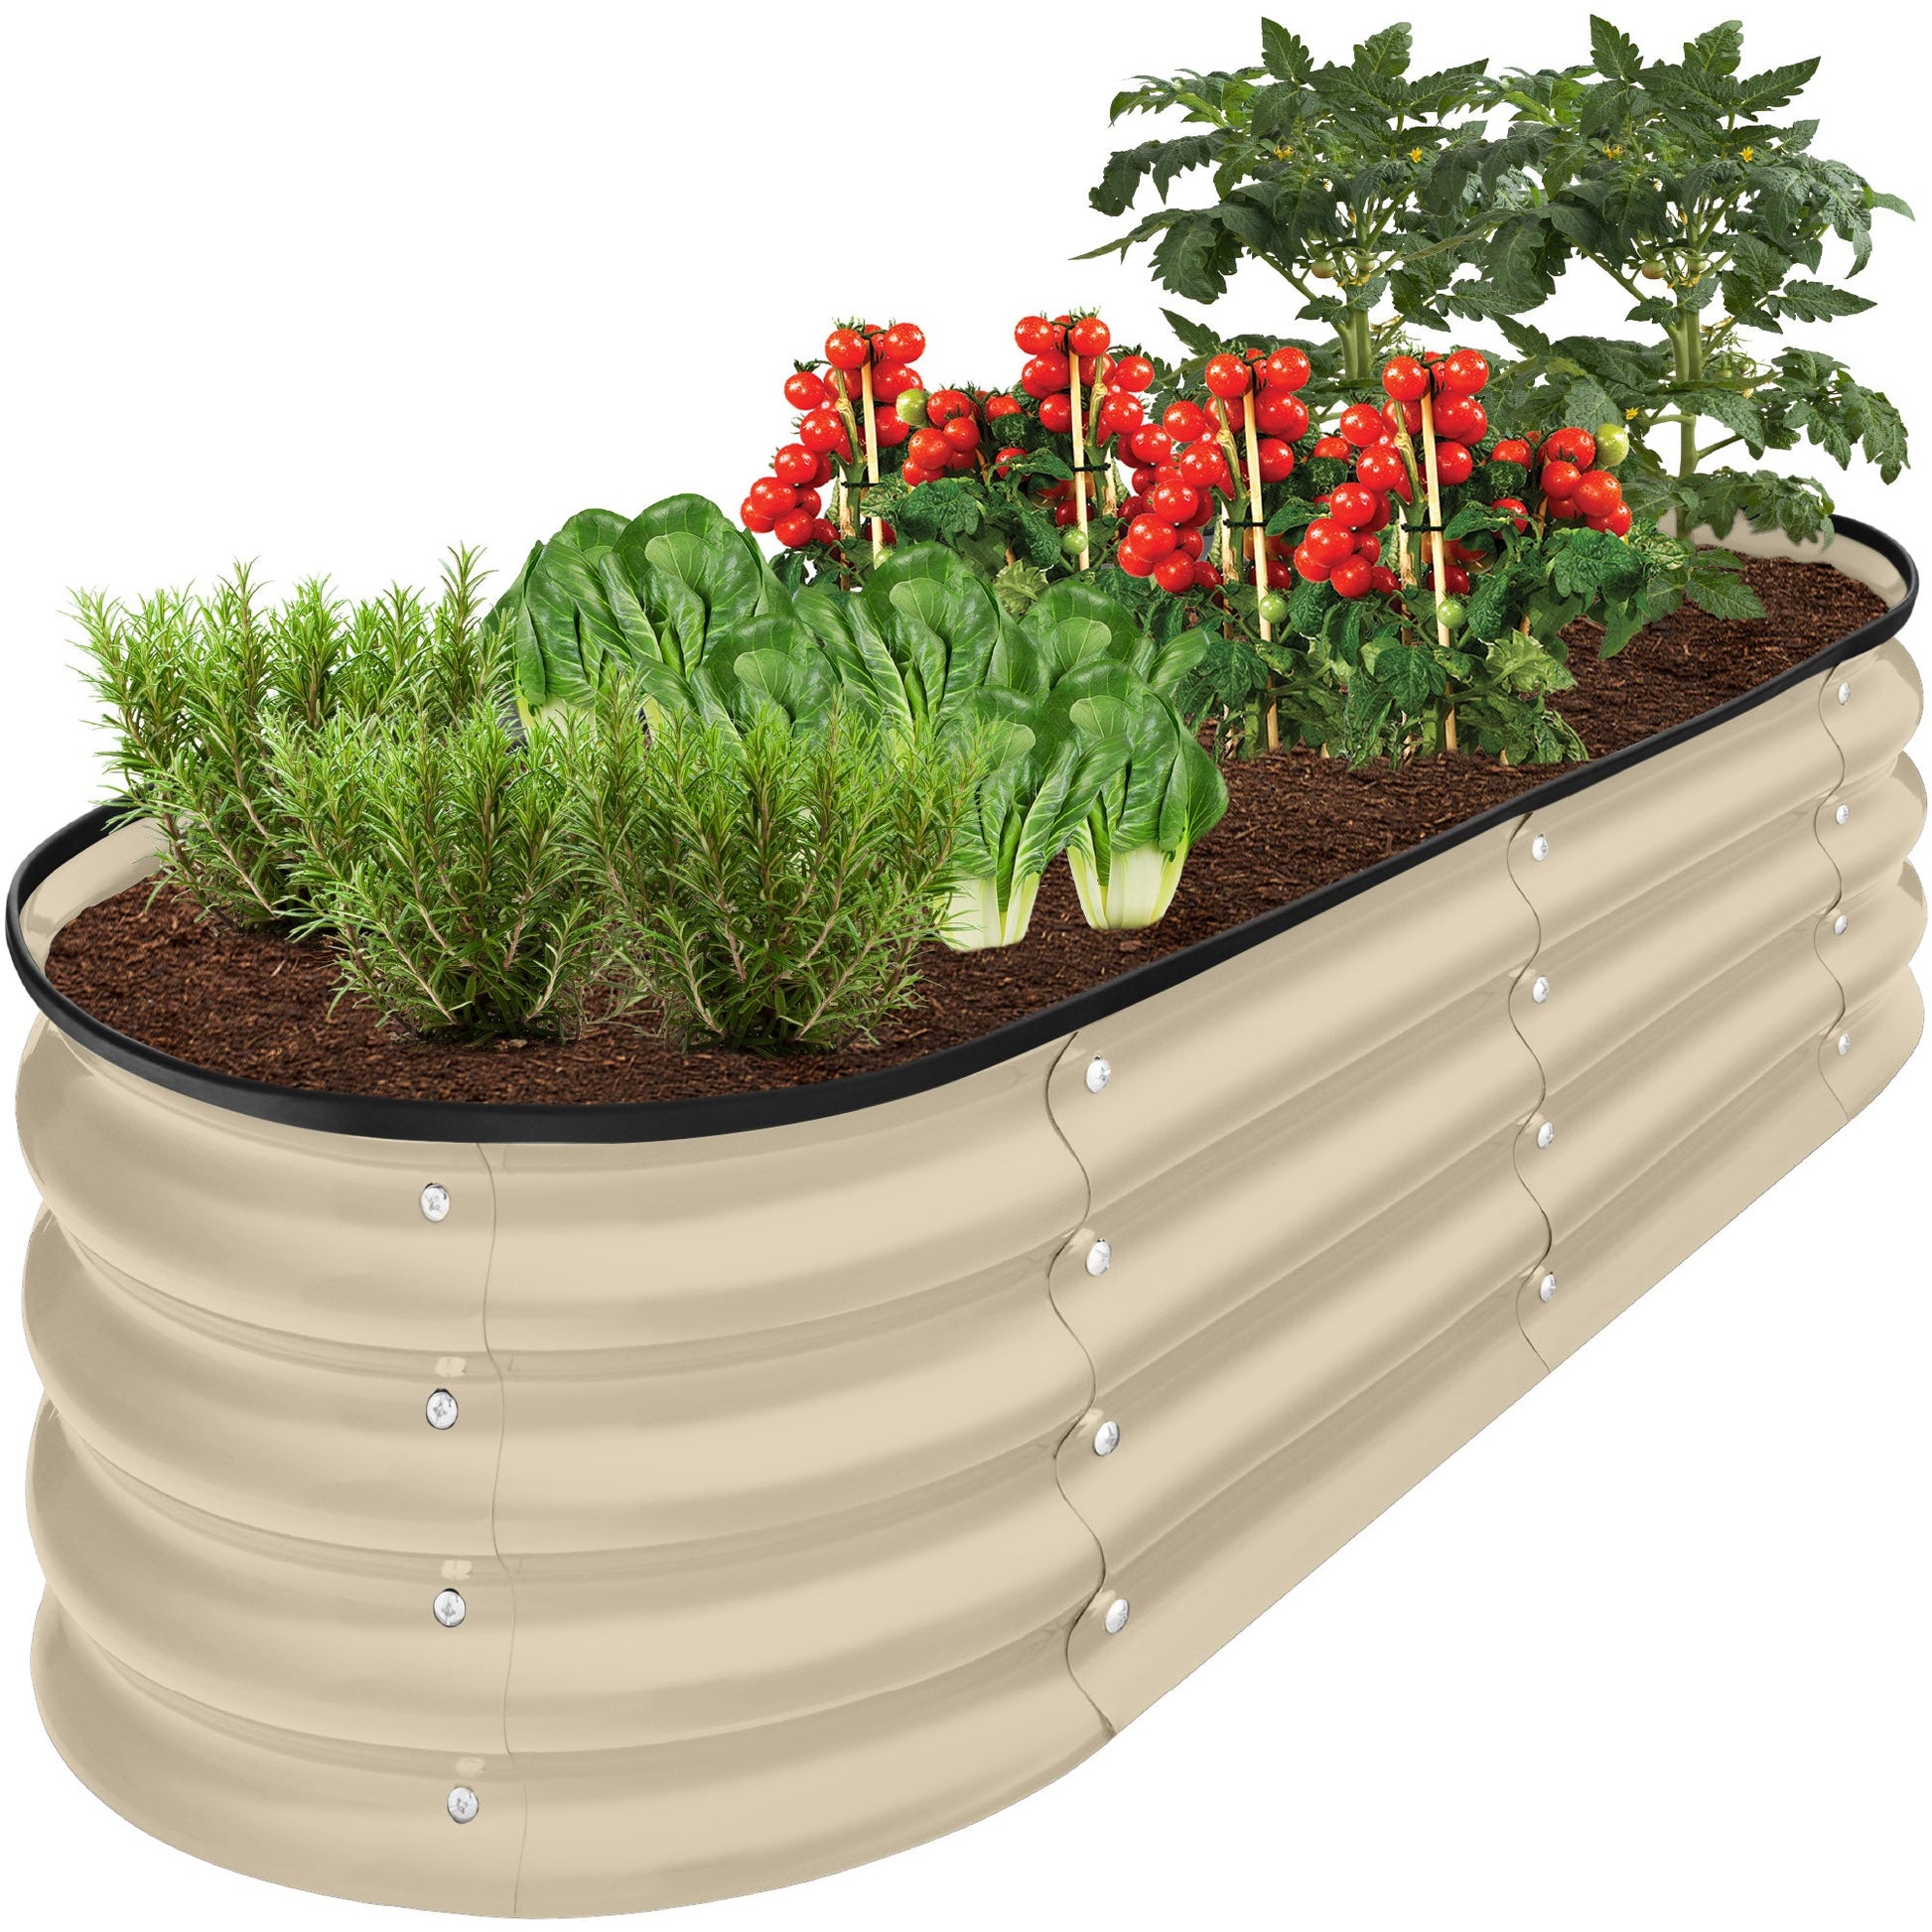 Outdoor Raised Metal Oval Garden Bed, Planter Box - 4x2x1ft